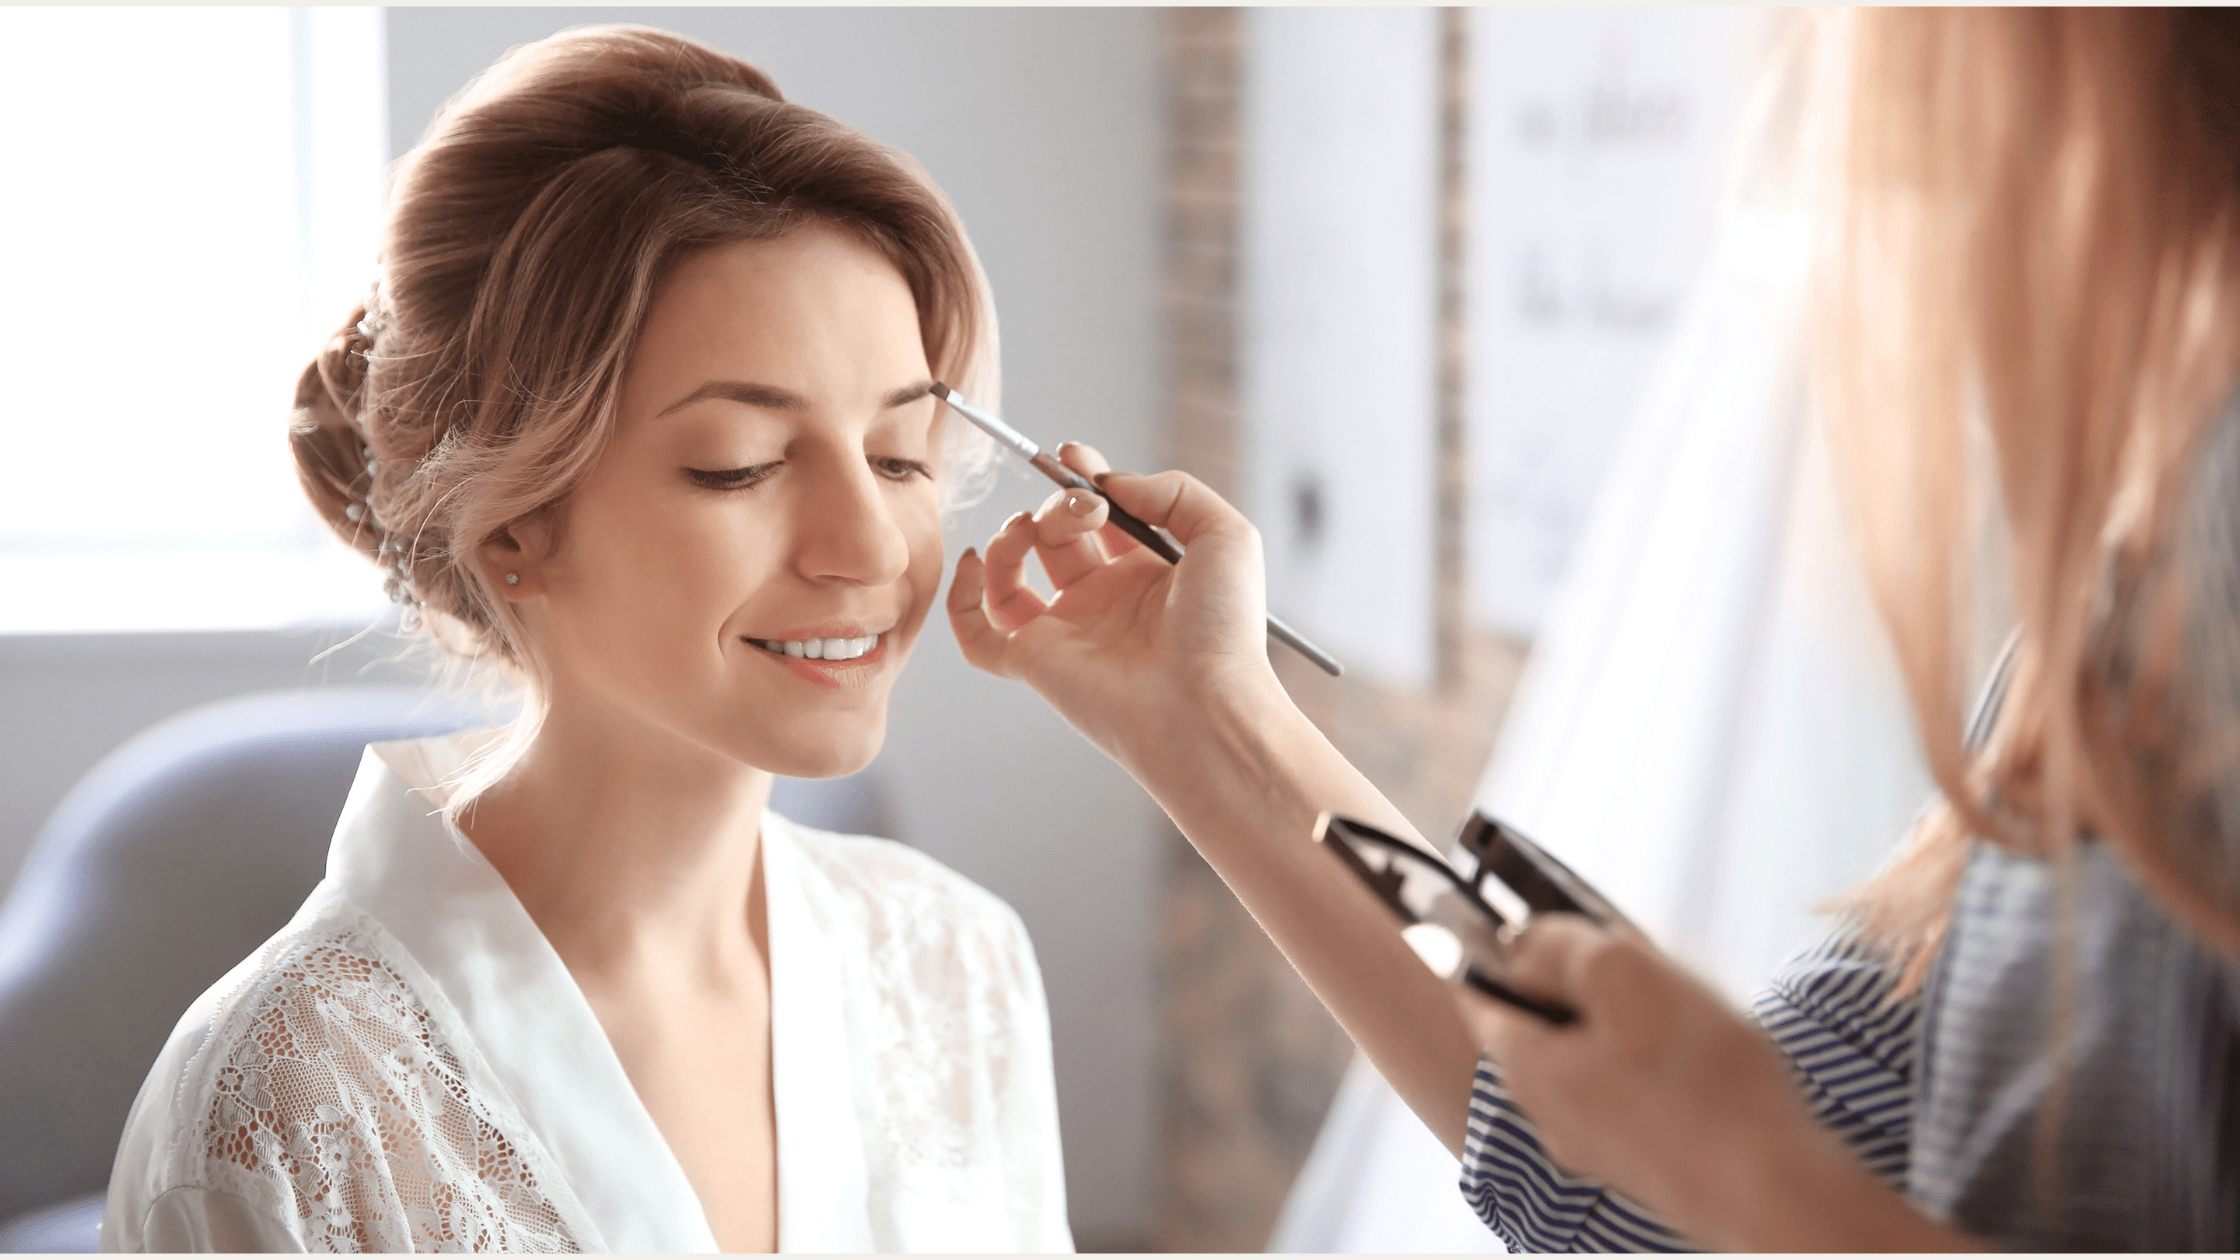 Makeup artist applying bridal makeup to a bride